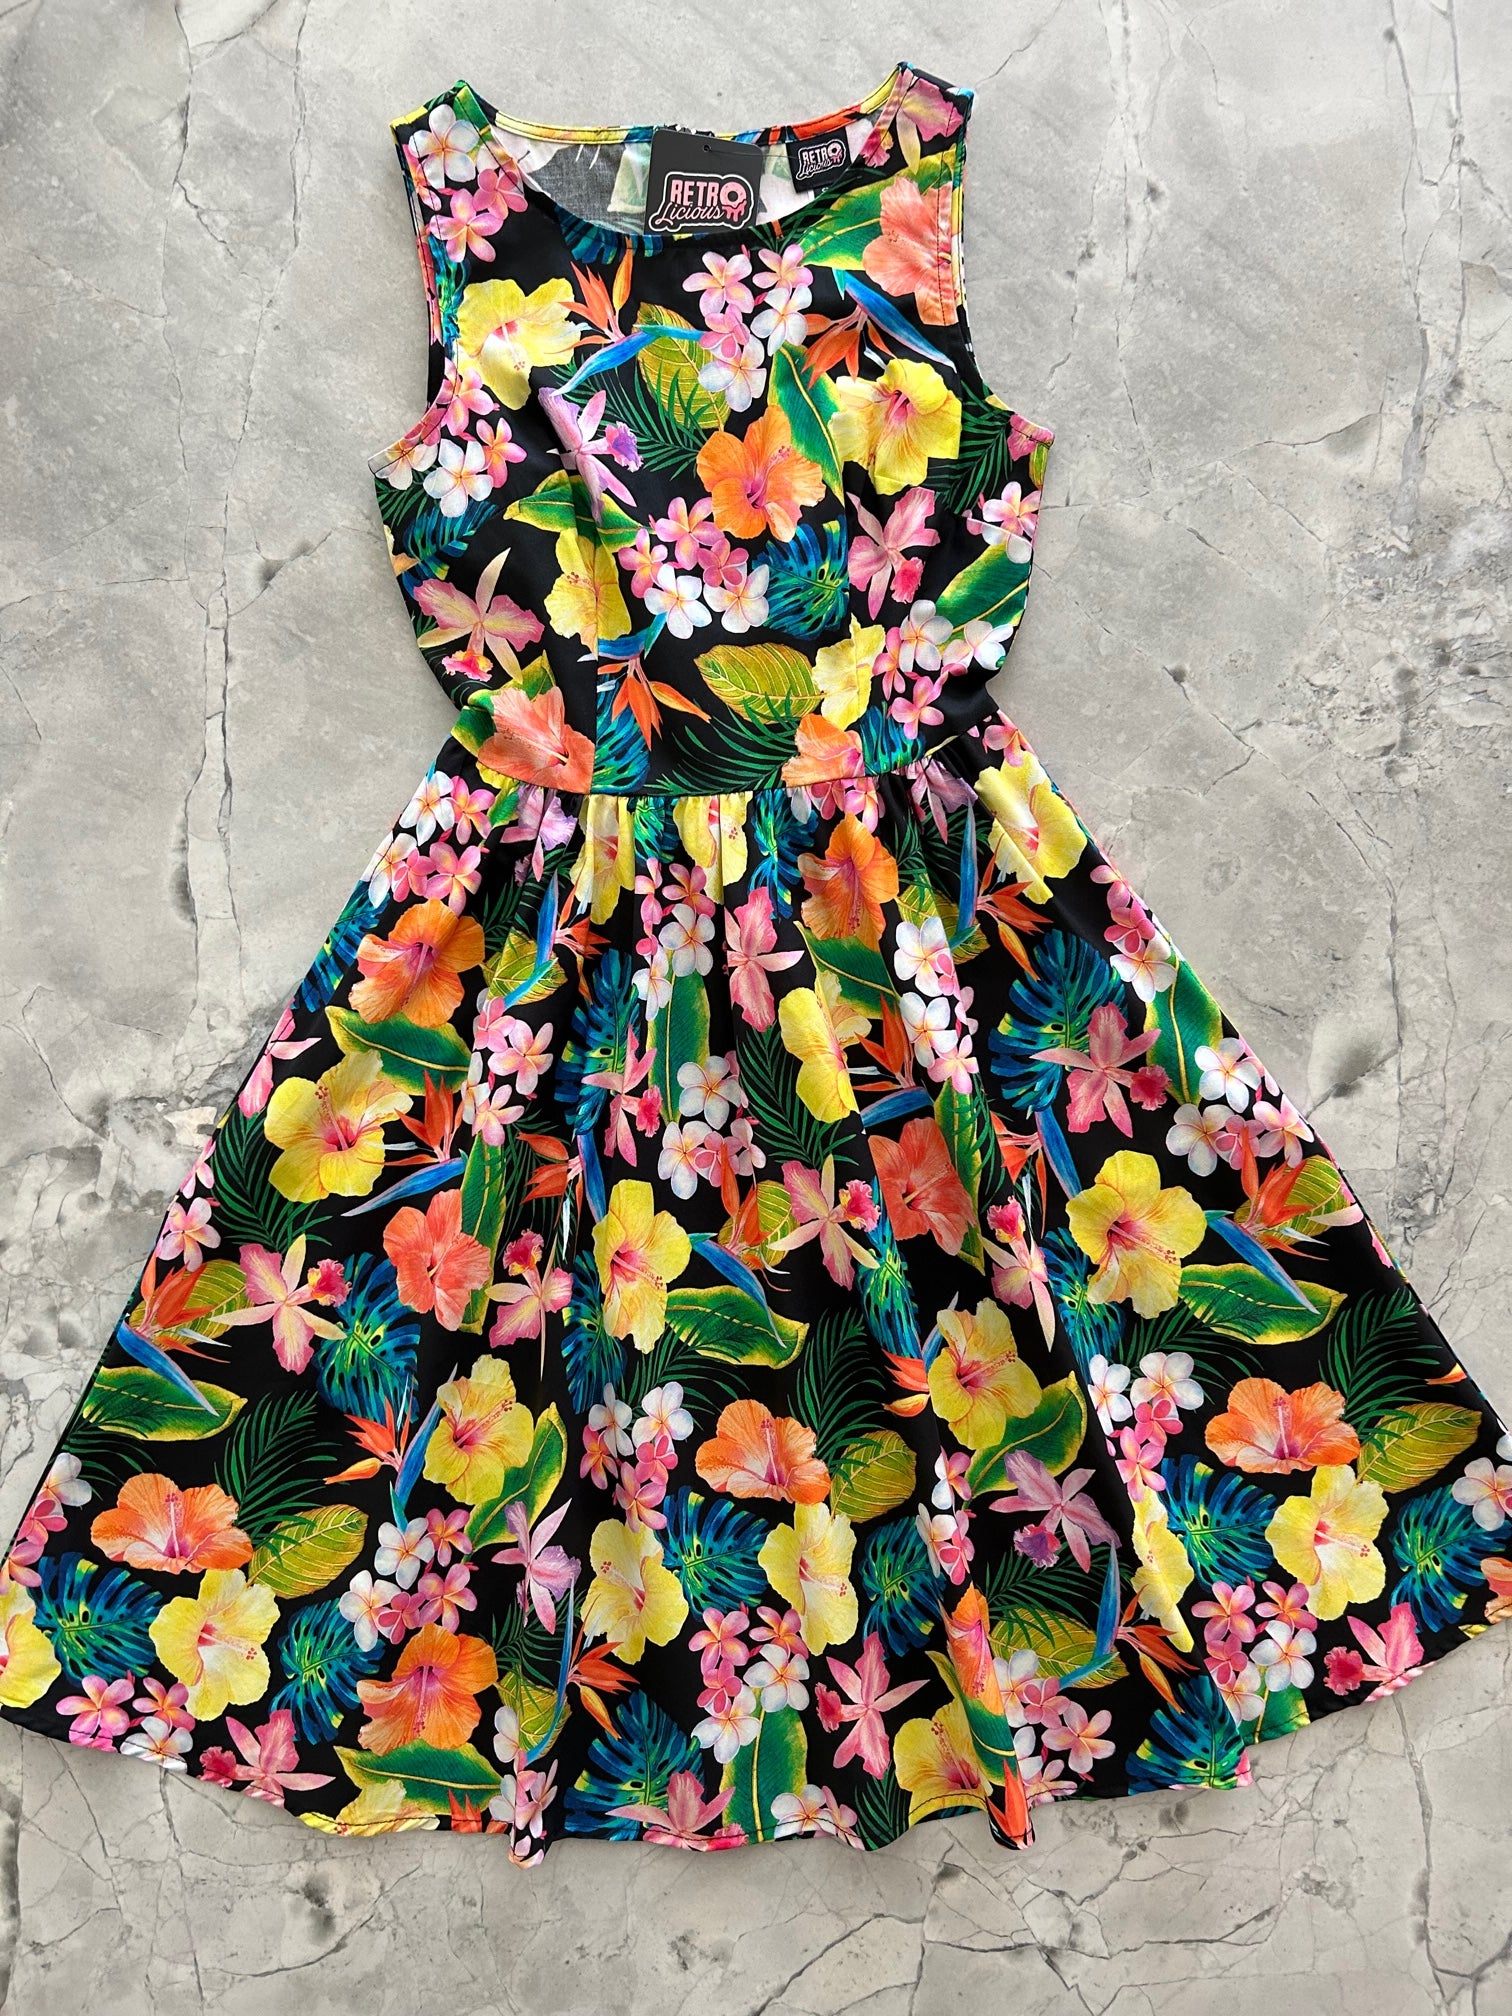 retro floral dress